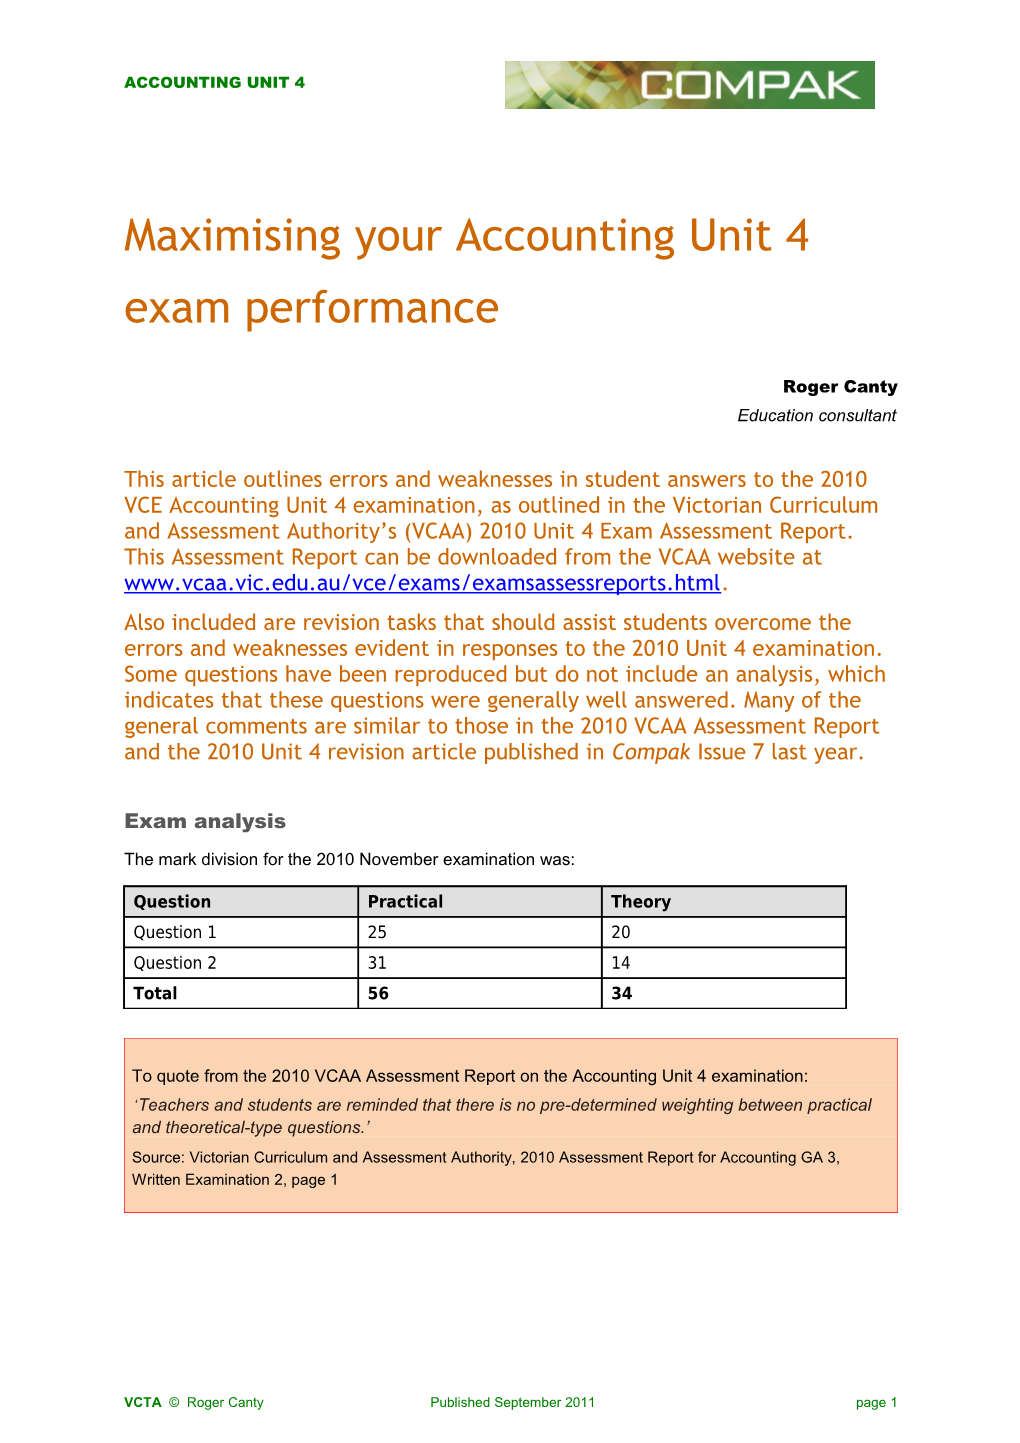 Maximising Your Accounting Unit 4 Exam Performance